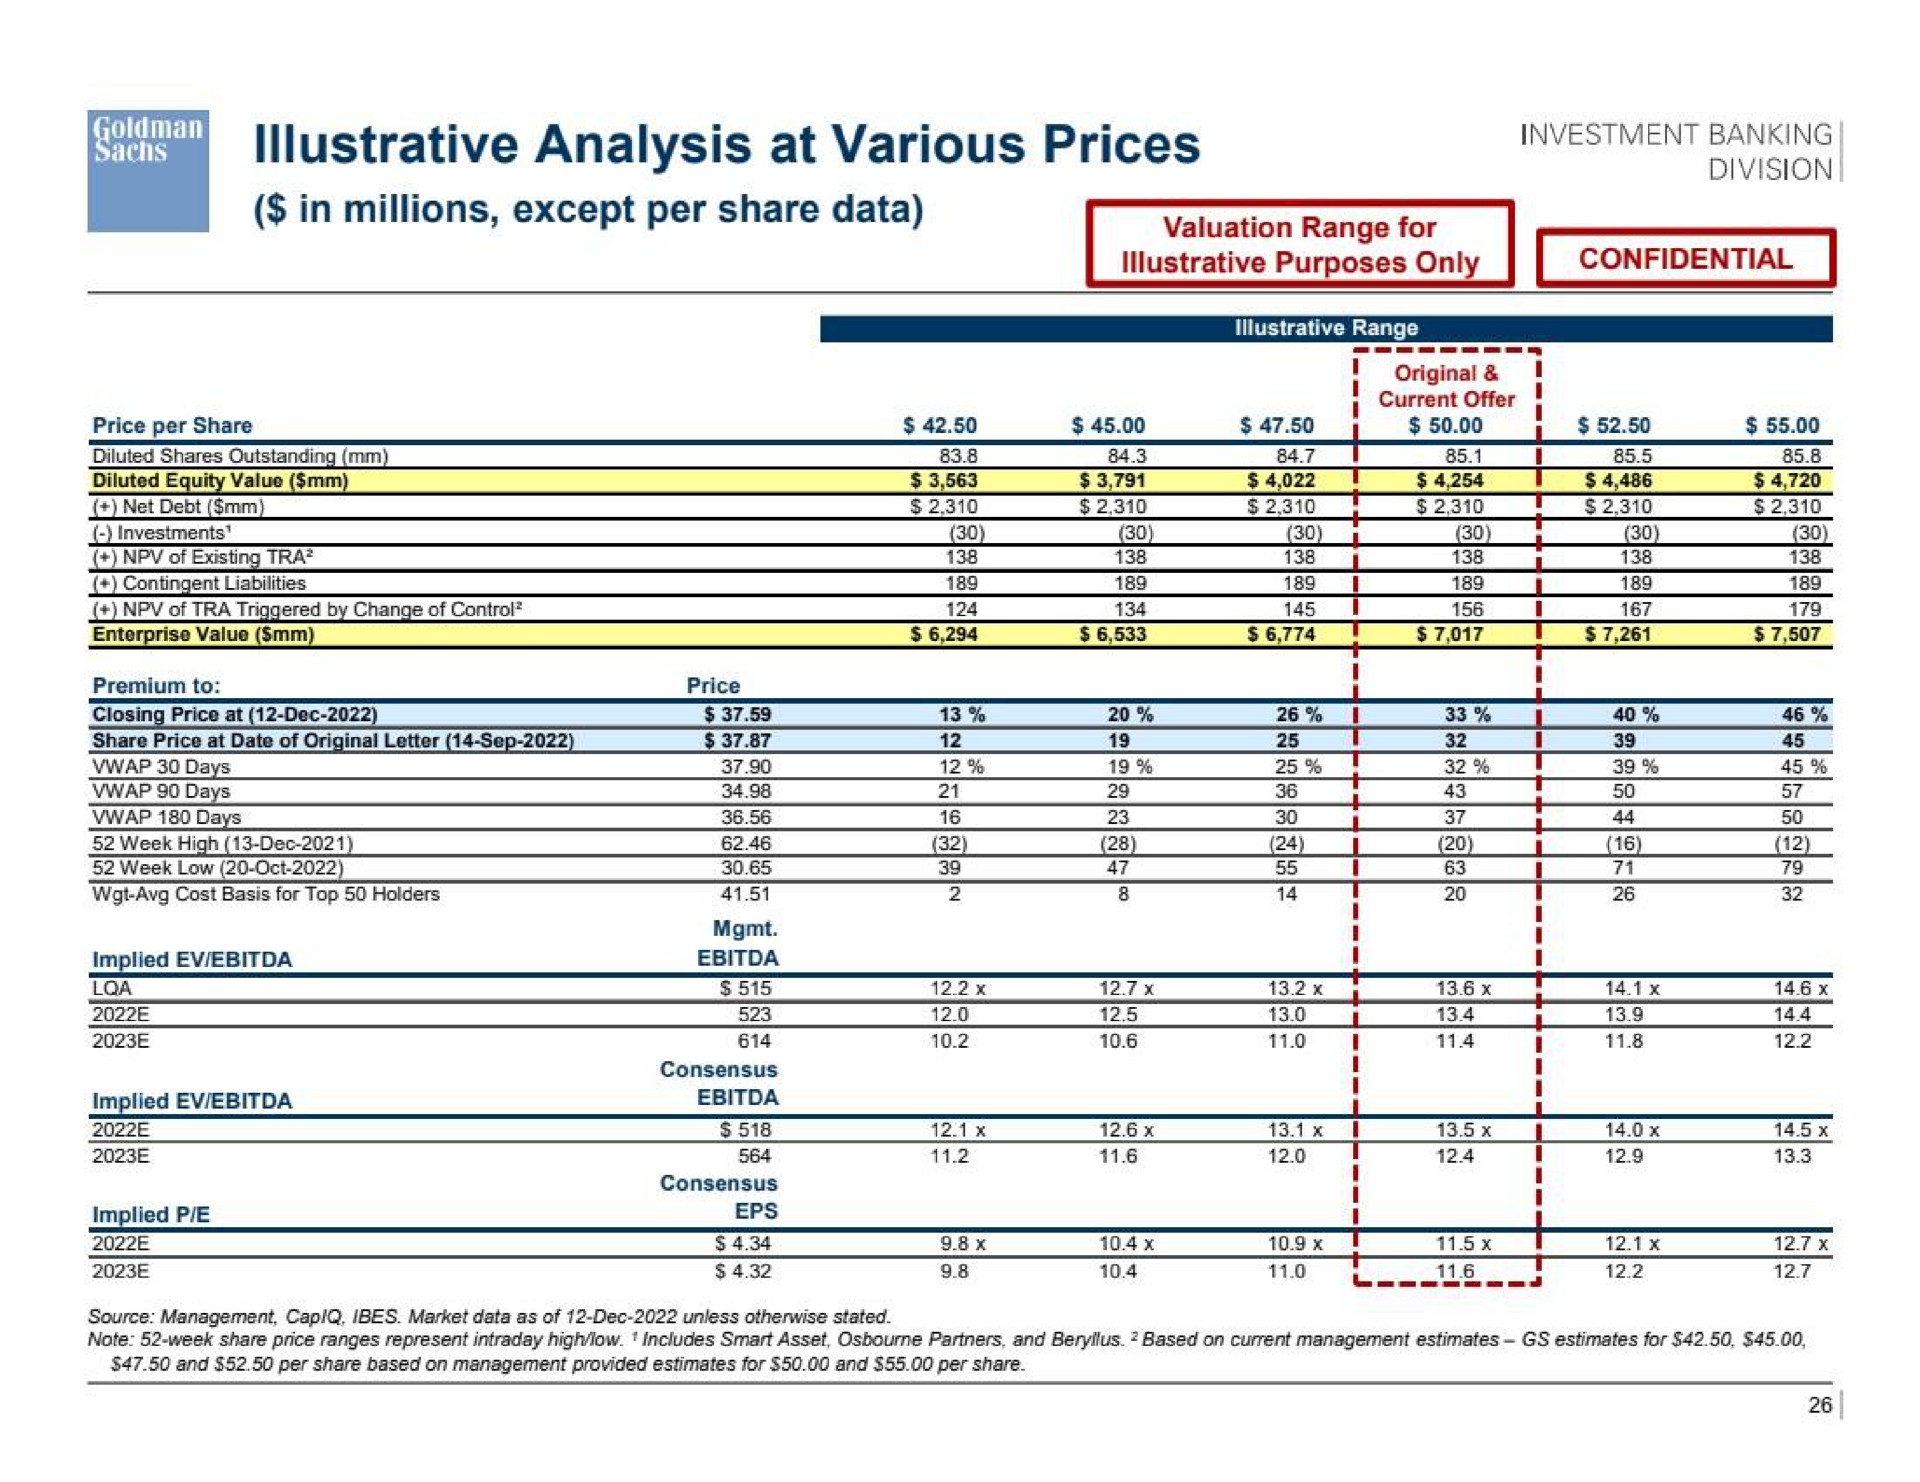 illustrative analysis at various prices | Goldman Sachs